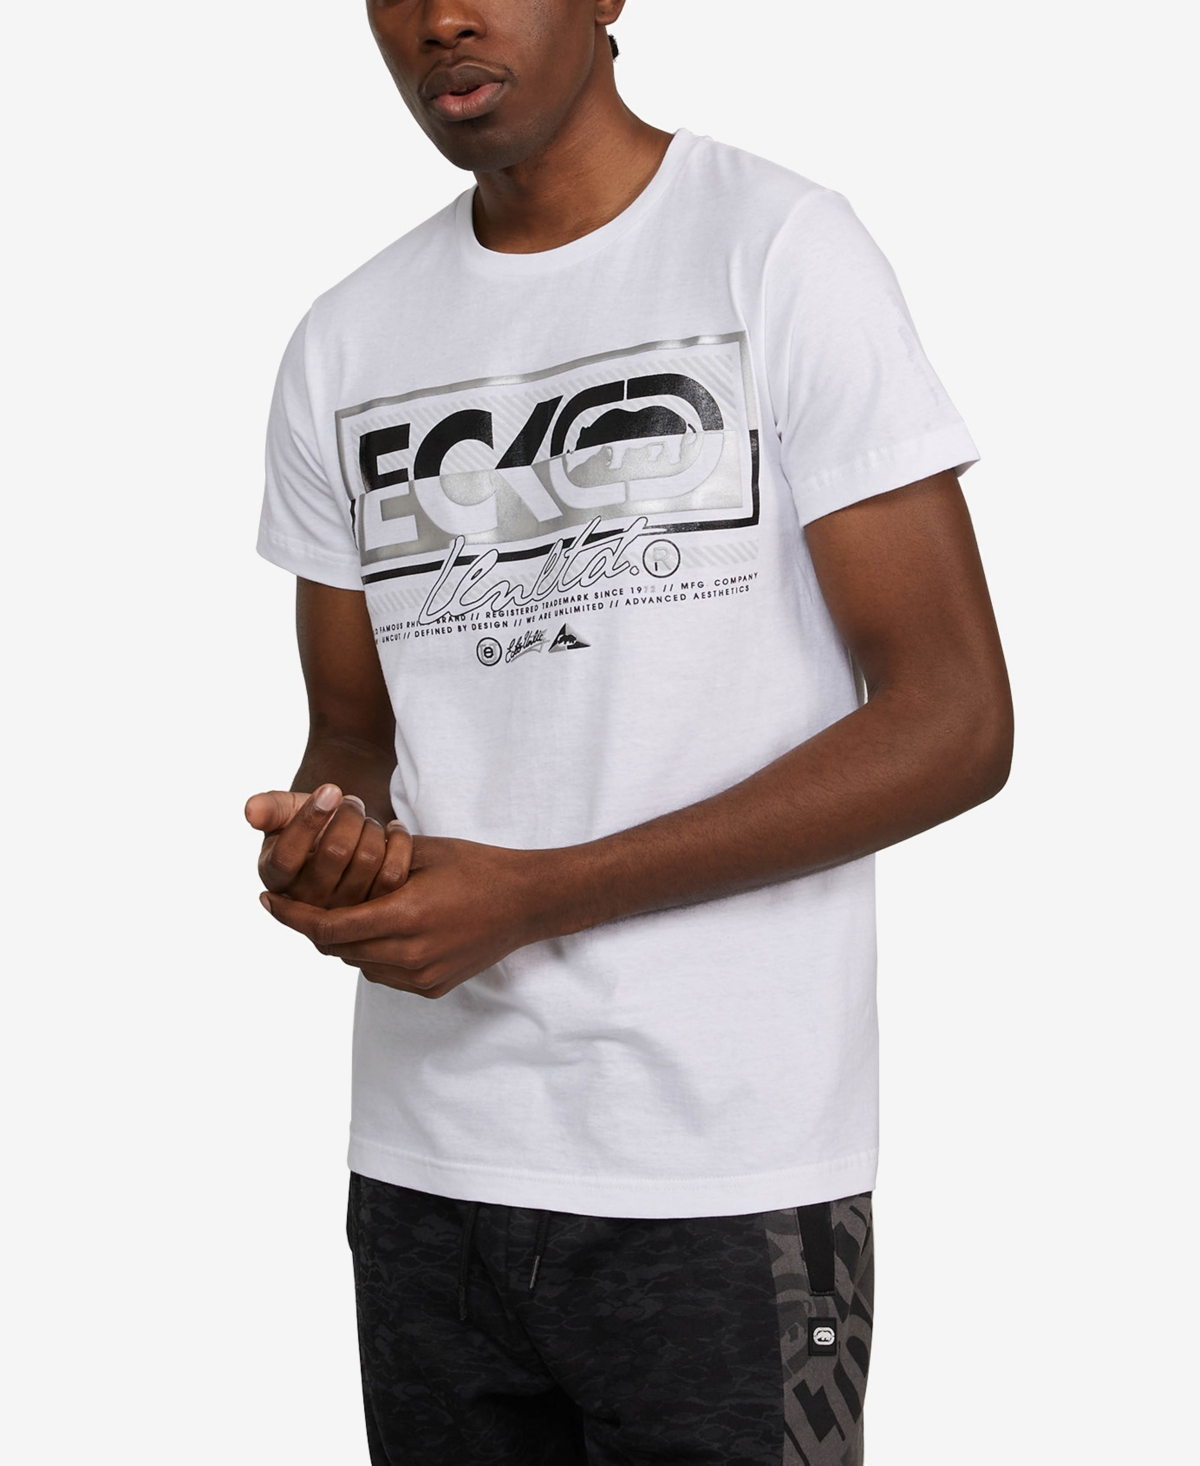 Ecko Unltd Men's Big and Tall Broadband Graphic T-shirt